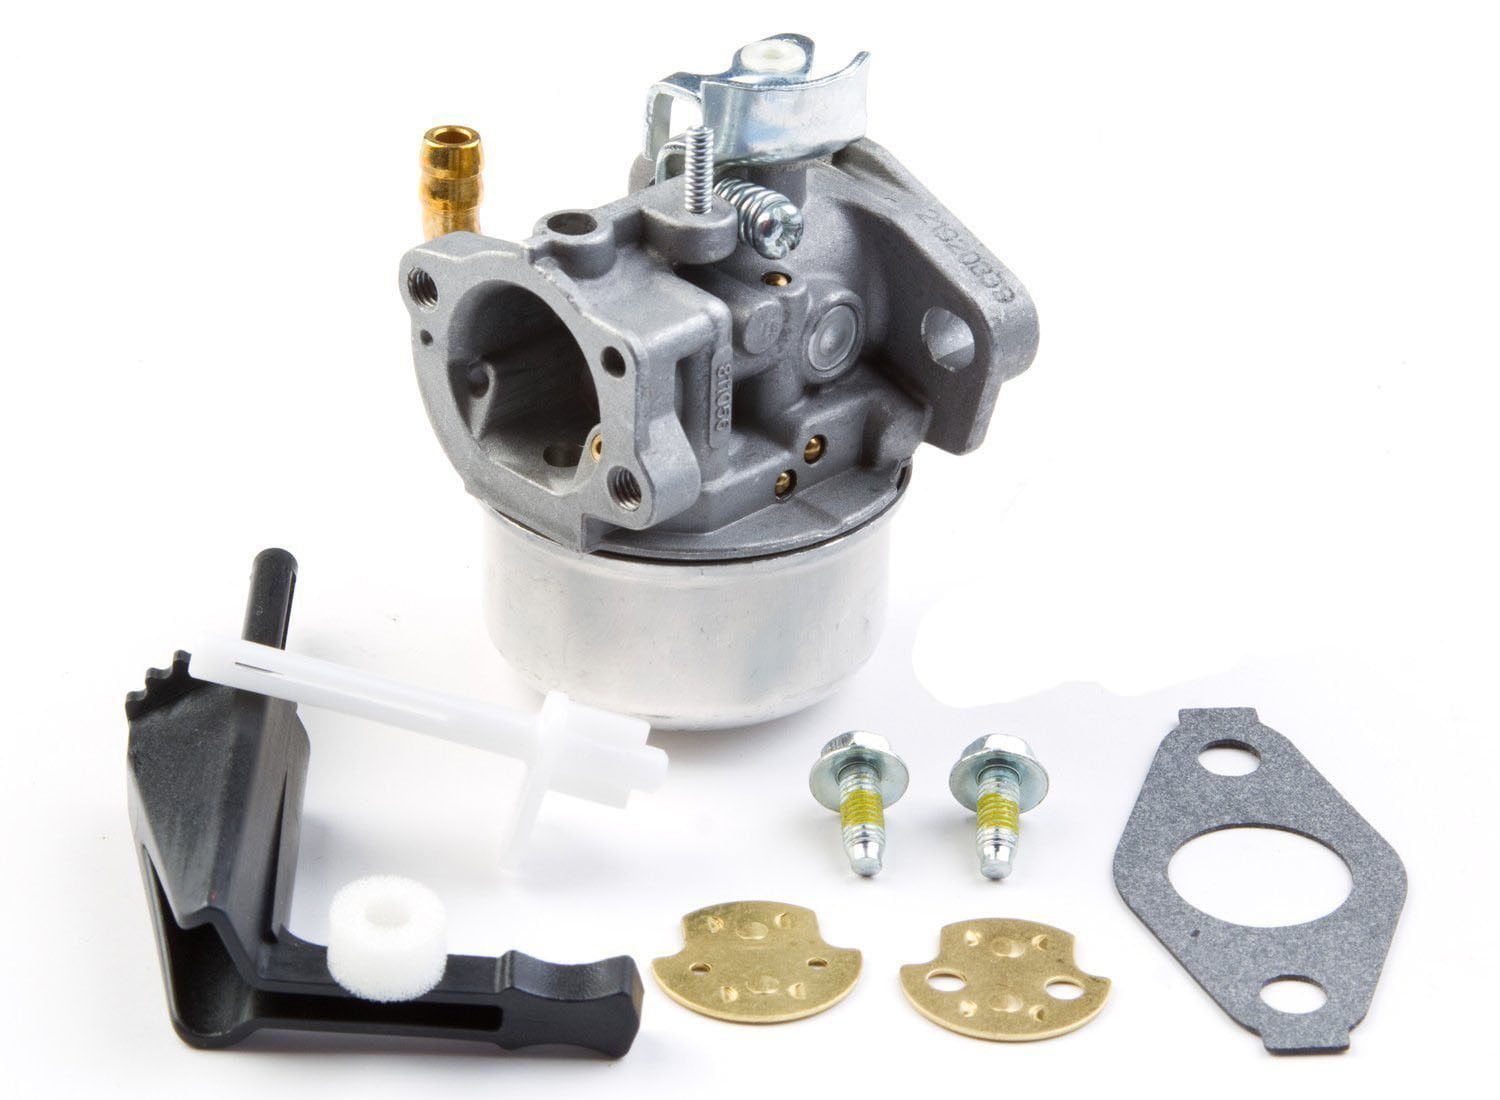 Details about   Carburetor Carb for MTD 21A-332A500 Tiller 5hp Briggs & Stratton OHV Engine 